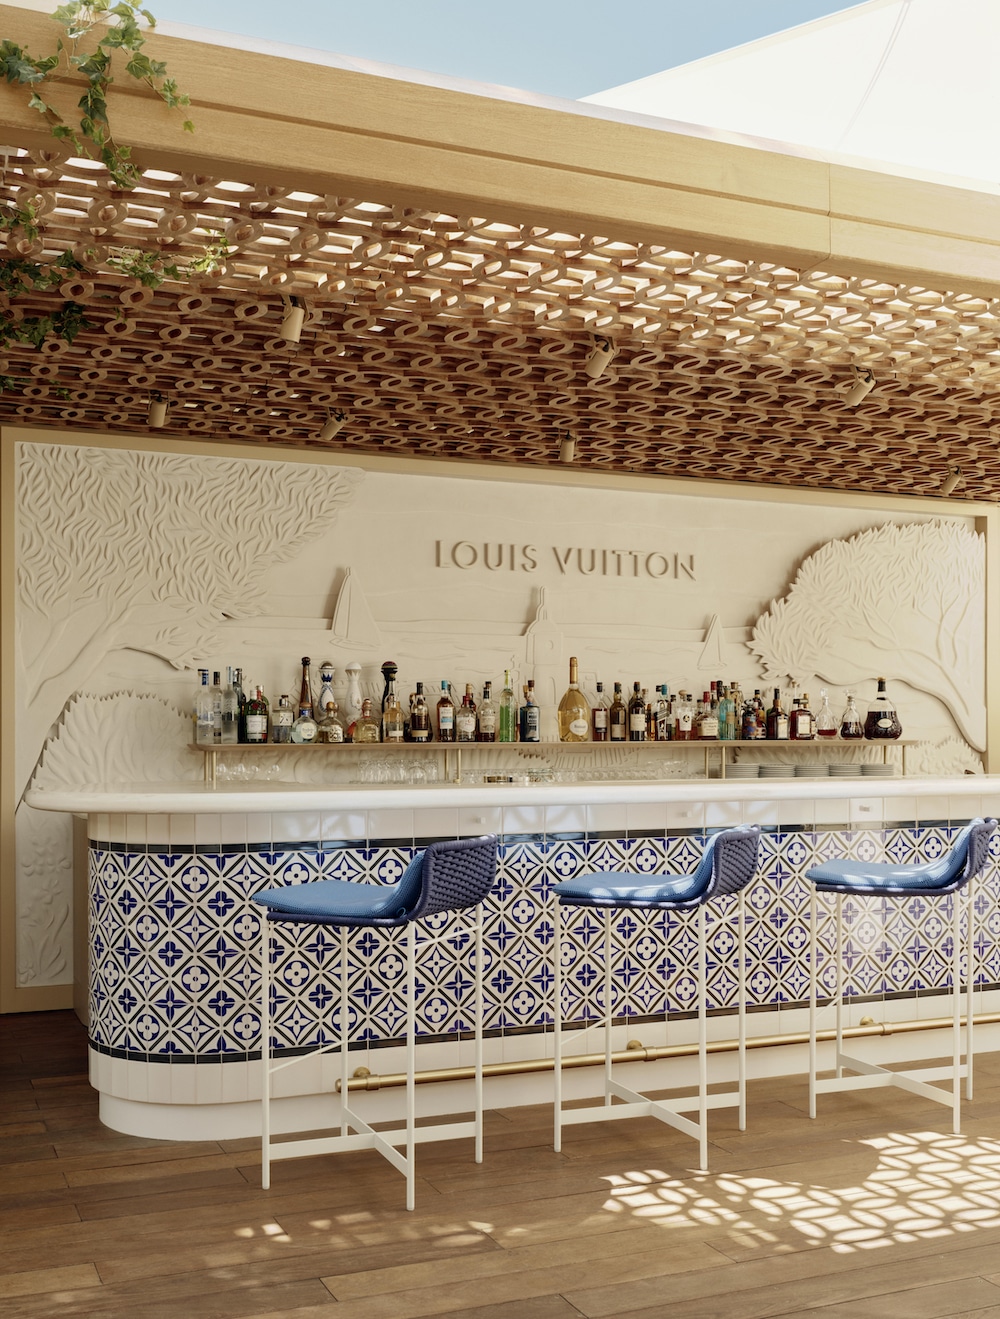 Saint Tropez Restaurant: Louis Vuitton Fusing Fashion and Food